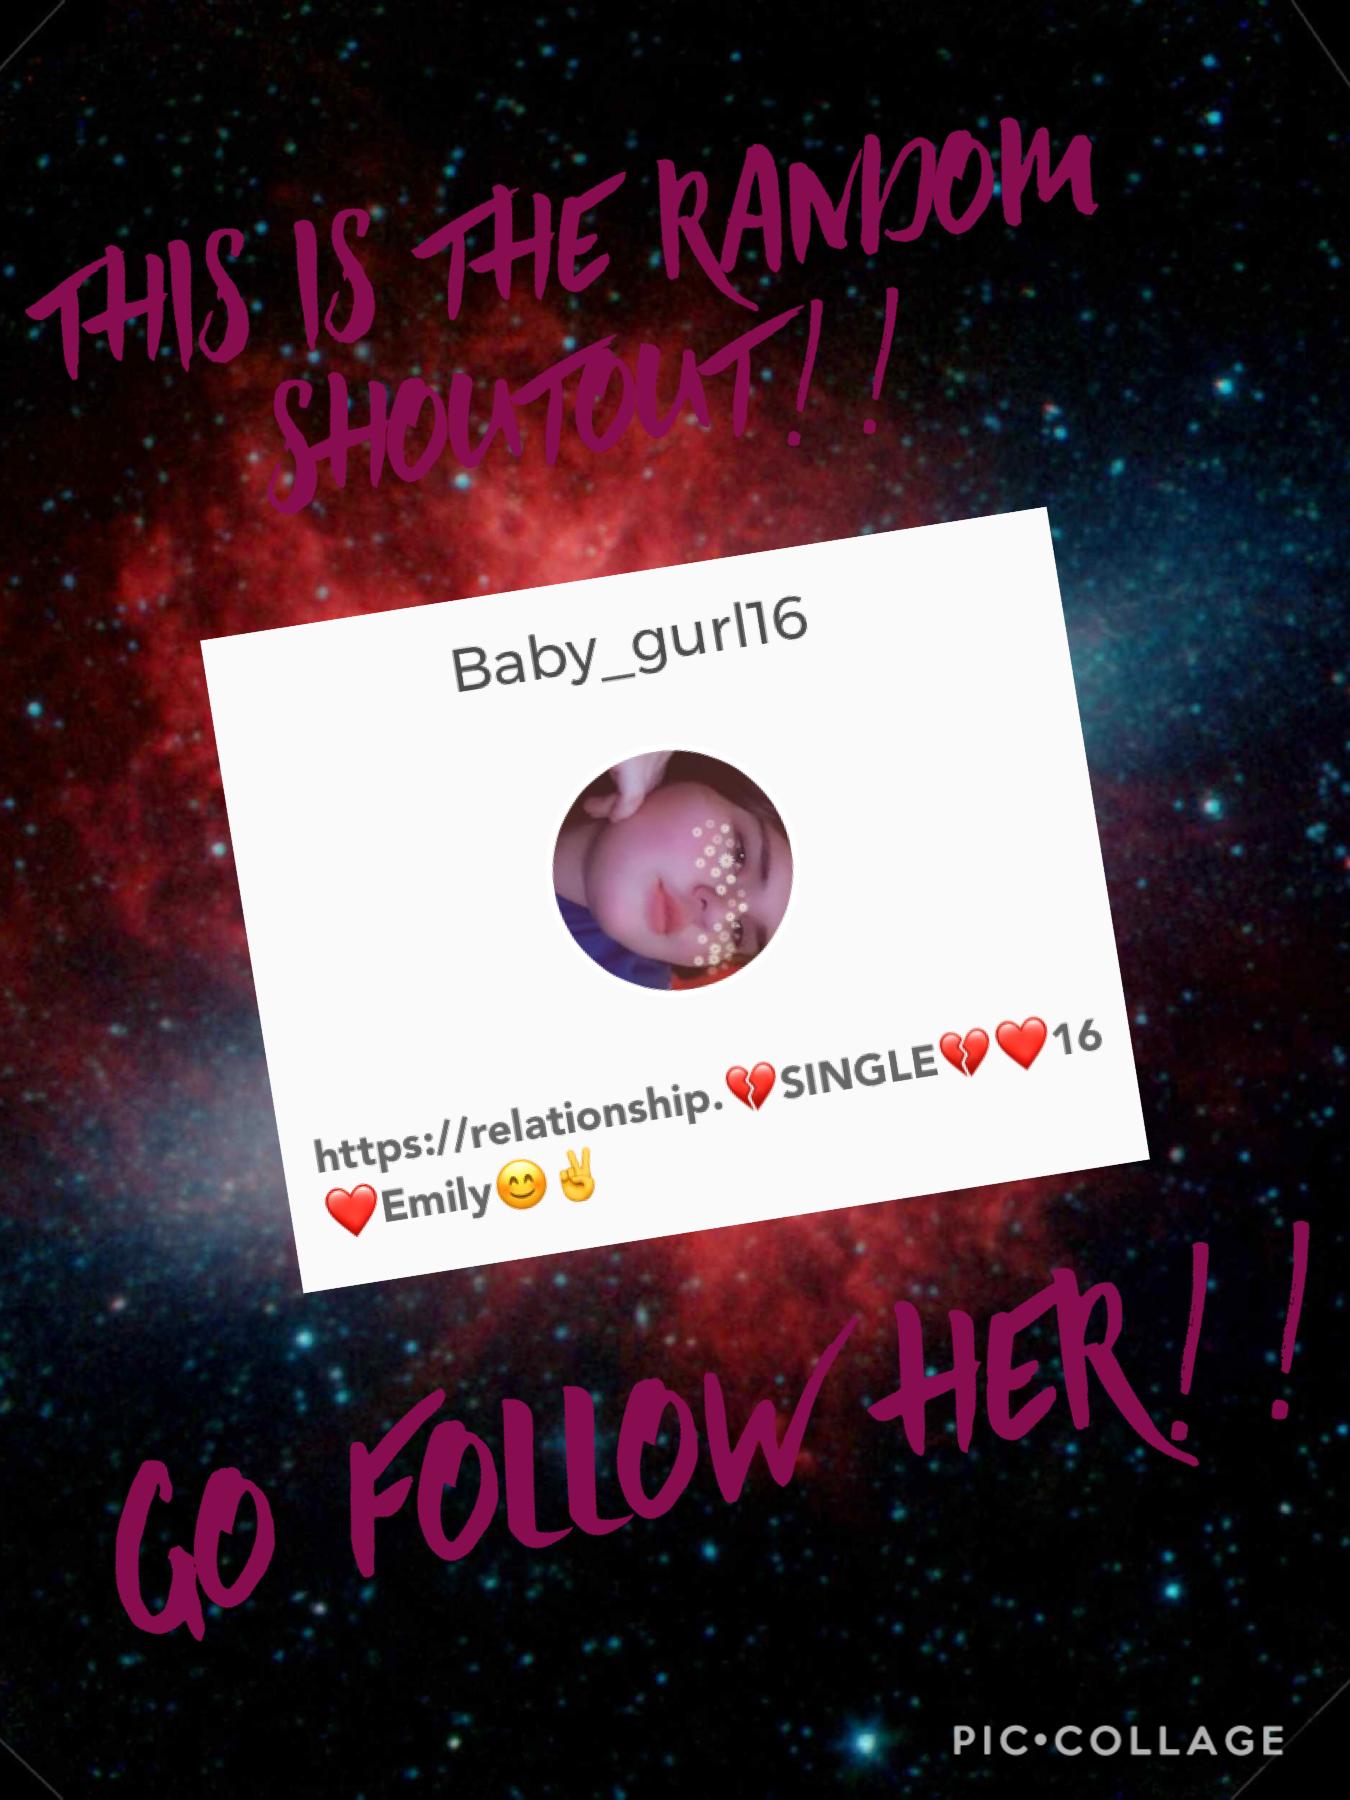 This is the random shoutout!!! Go follow her!!! Congrats girl!!!